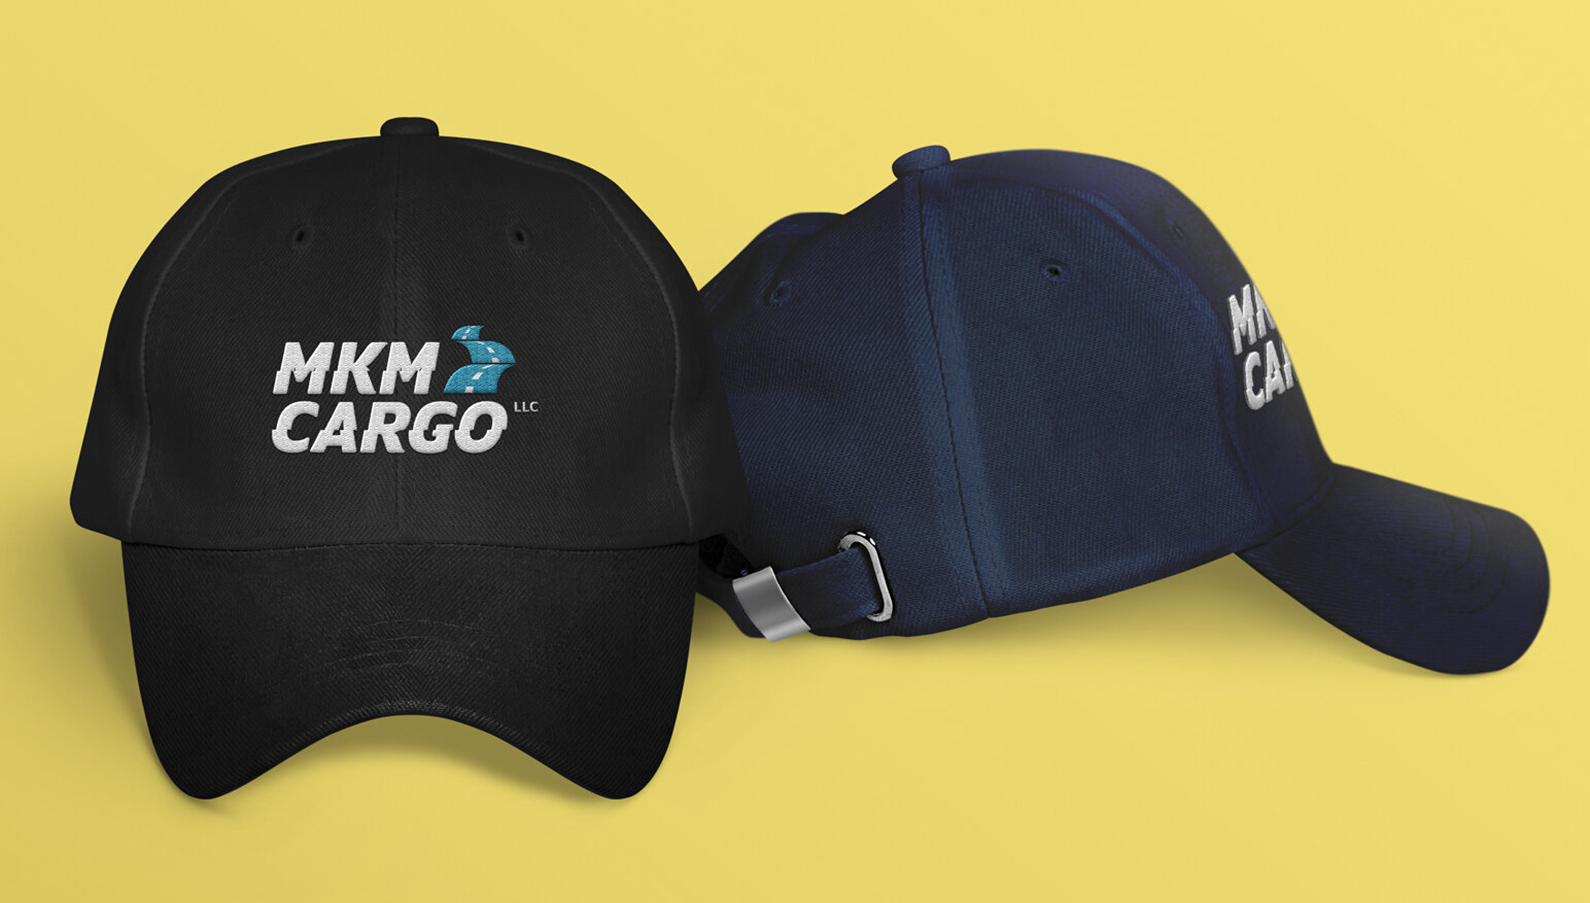 MKM Cargo LLC